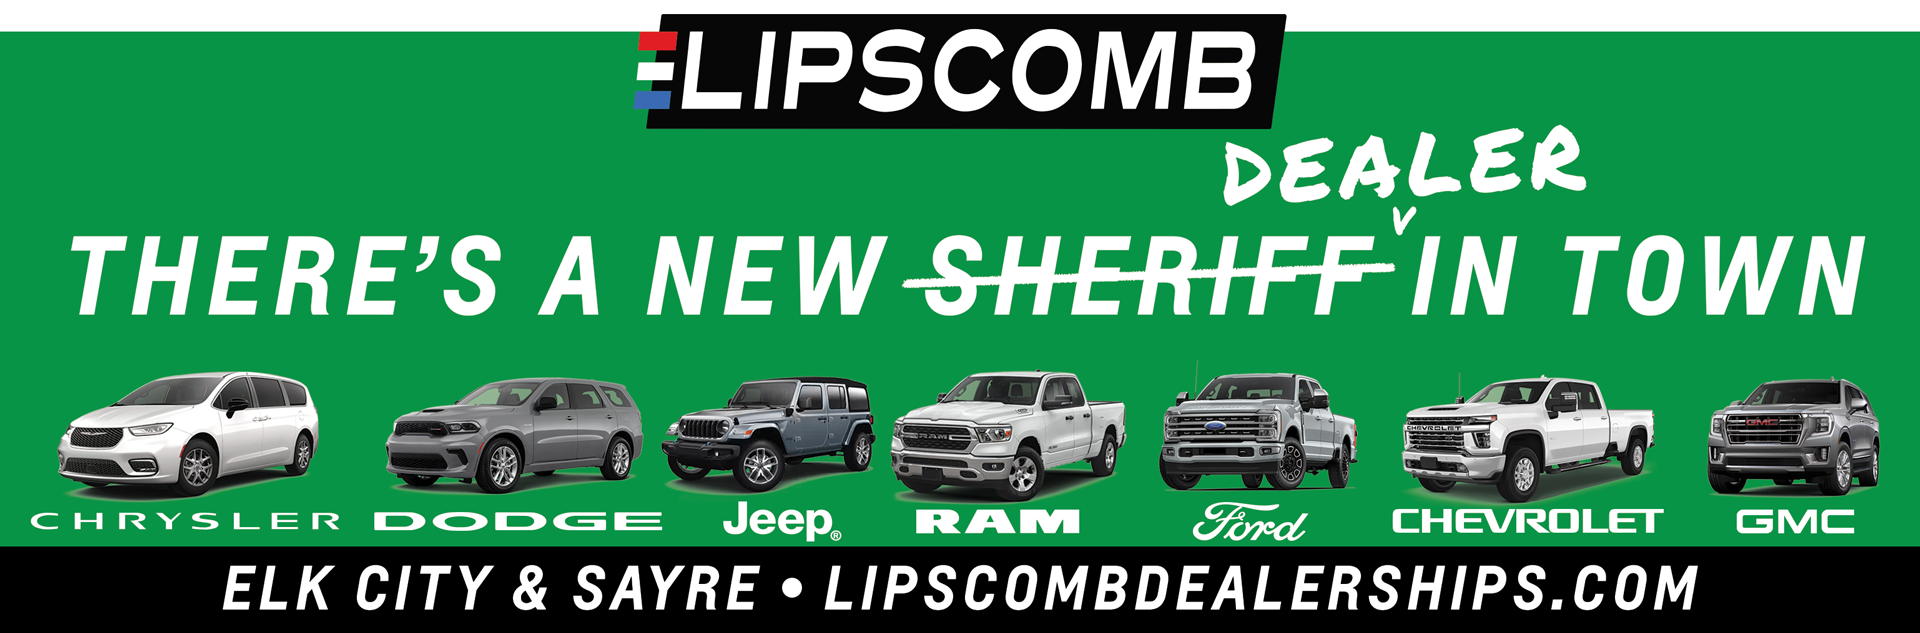 Lipscomb Chrysler Dodge Jeep Ram in Elk City OK